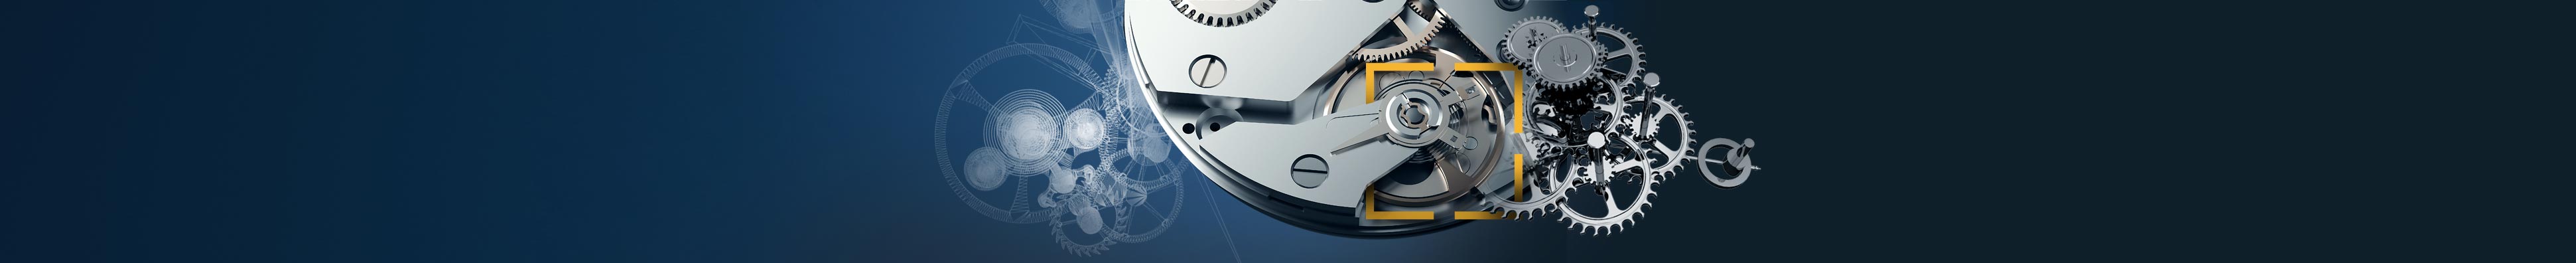 Brevets pour l'horlogerie - Watch Patents - Patente für die Uhrenindustrie